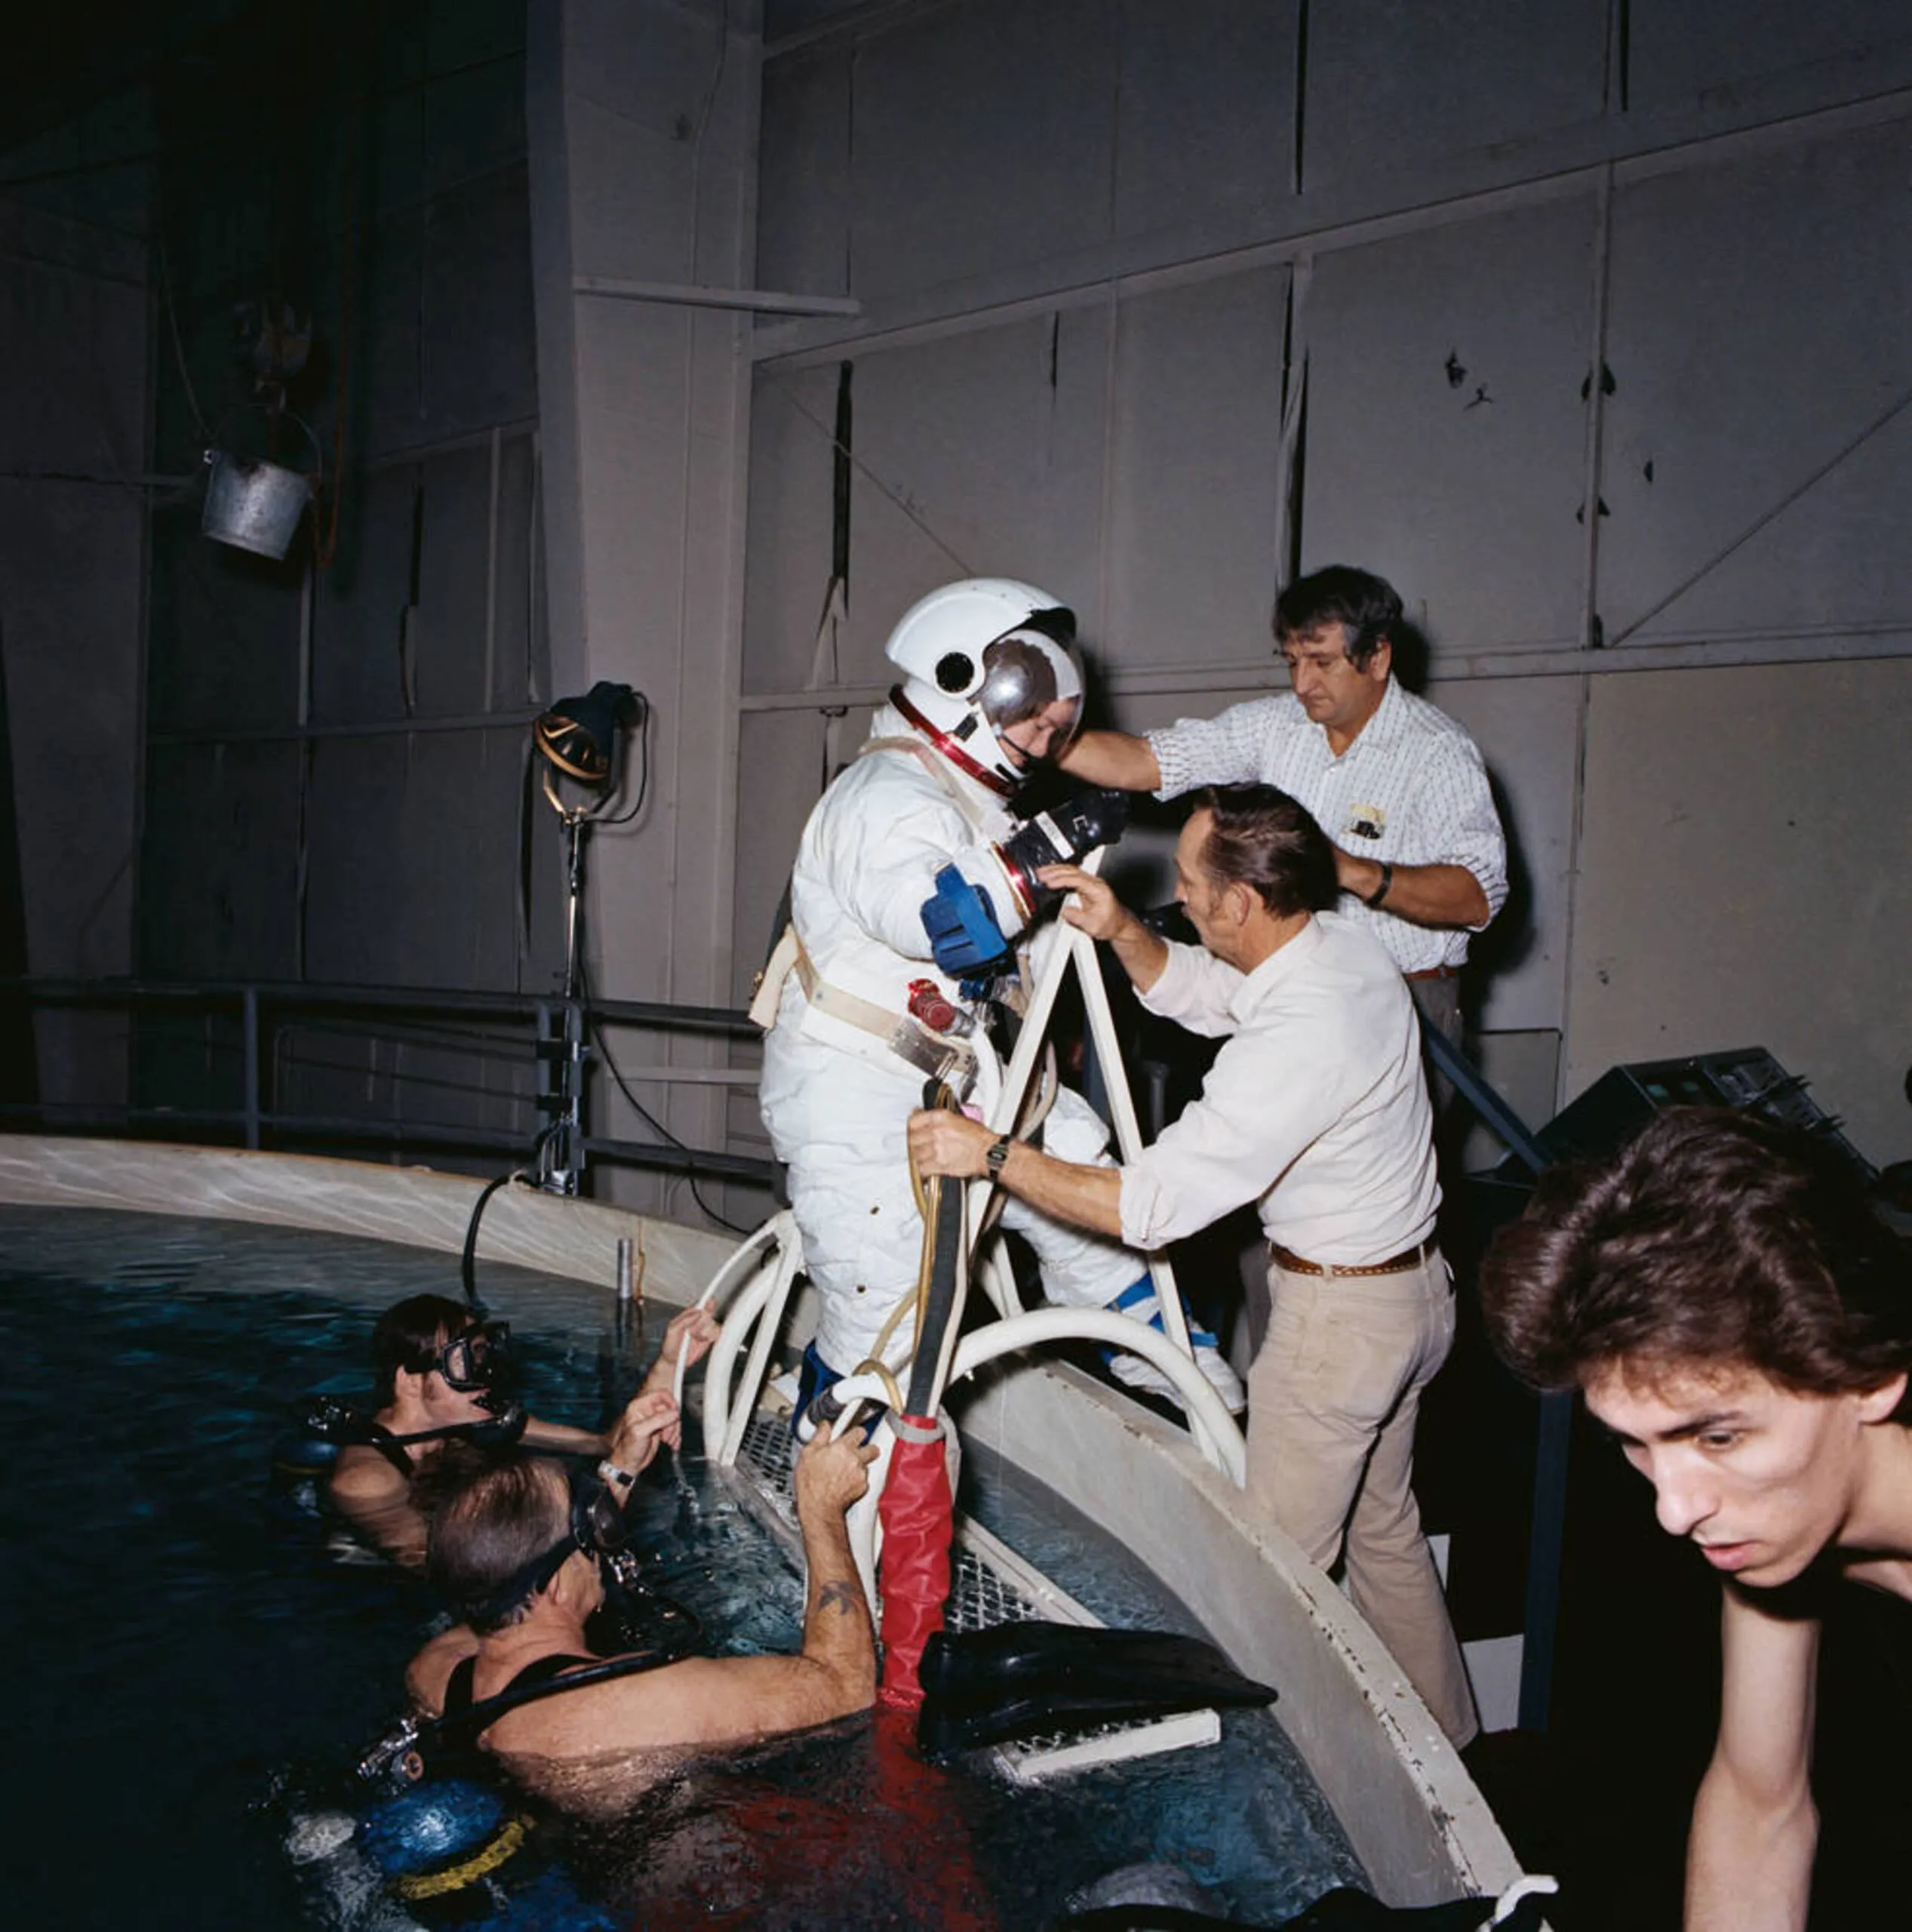 Image of astronaur training underwater